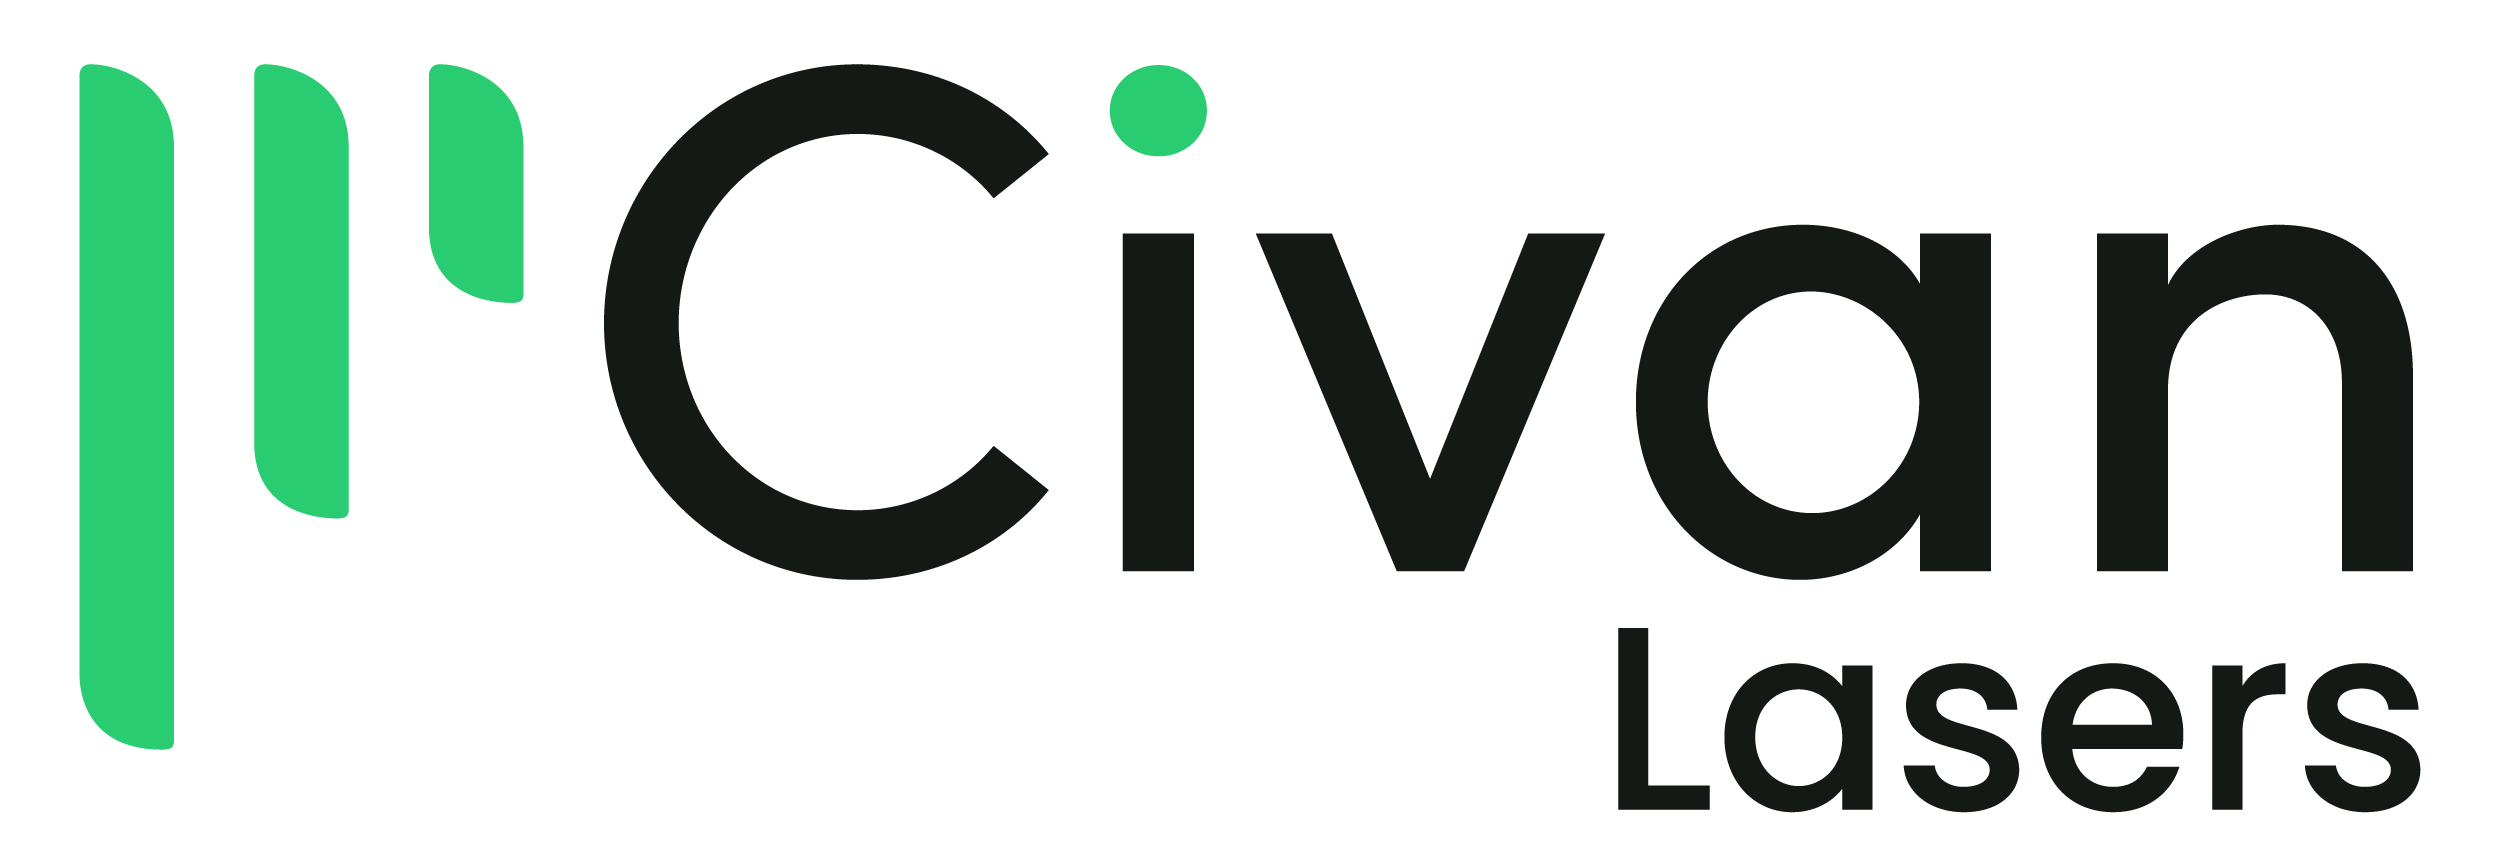 Civan Logo